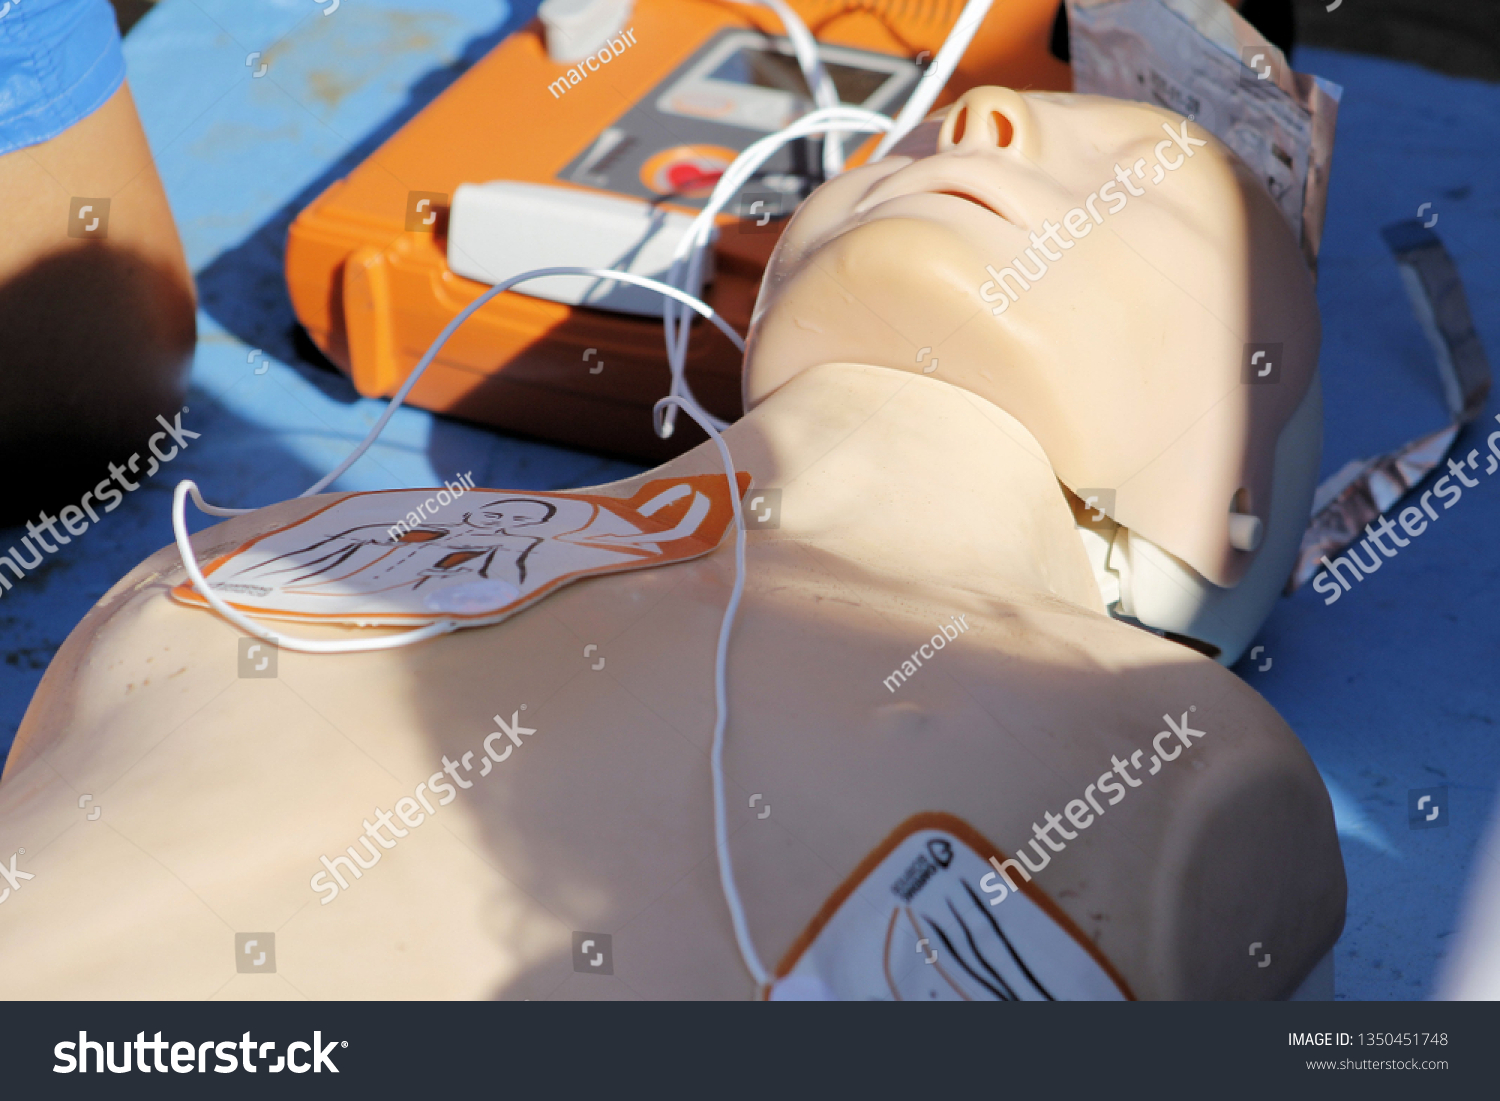 First aid training. Cardiac massage. Cardiopulmonary resuscitation - CPR training. #1350451748